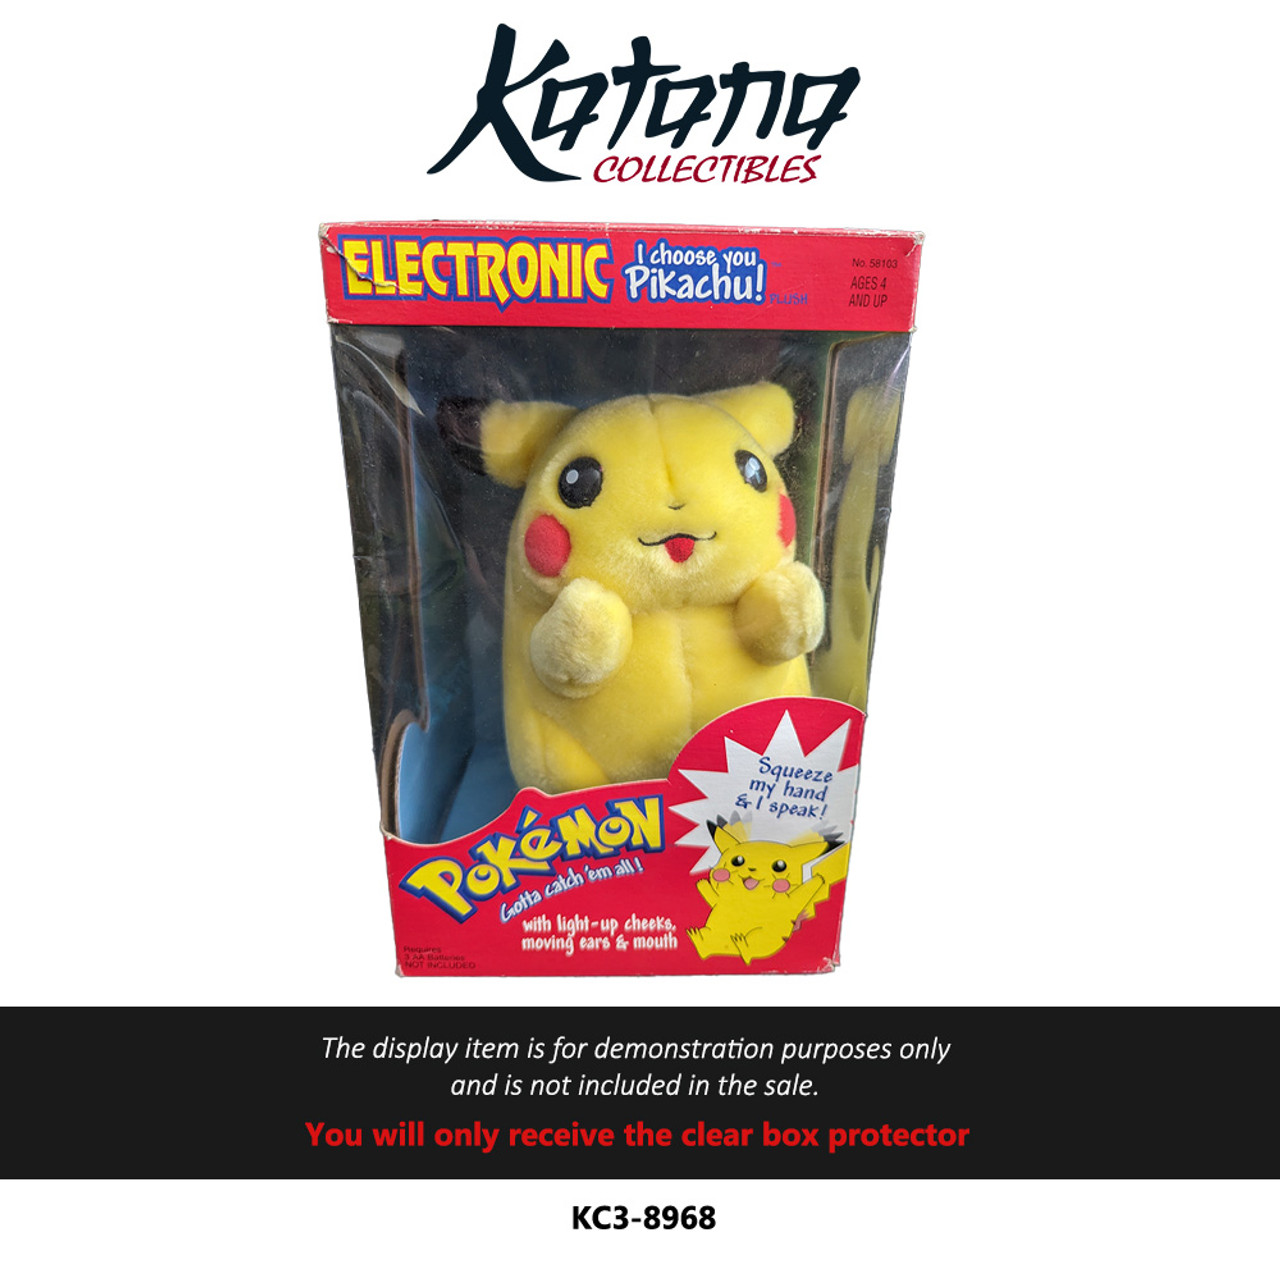 Katana Collectibles Protector For Pokémon Electronic I Choose You Pikachu! Plush 1999 Hasbro Nintendo